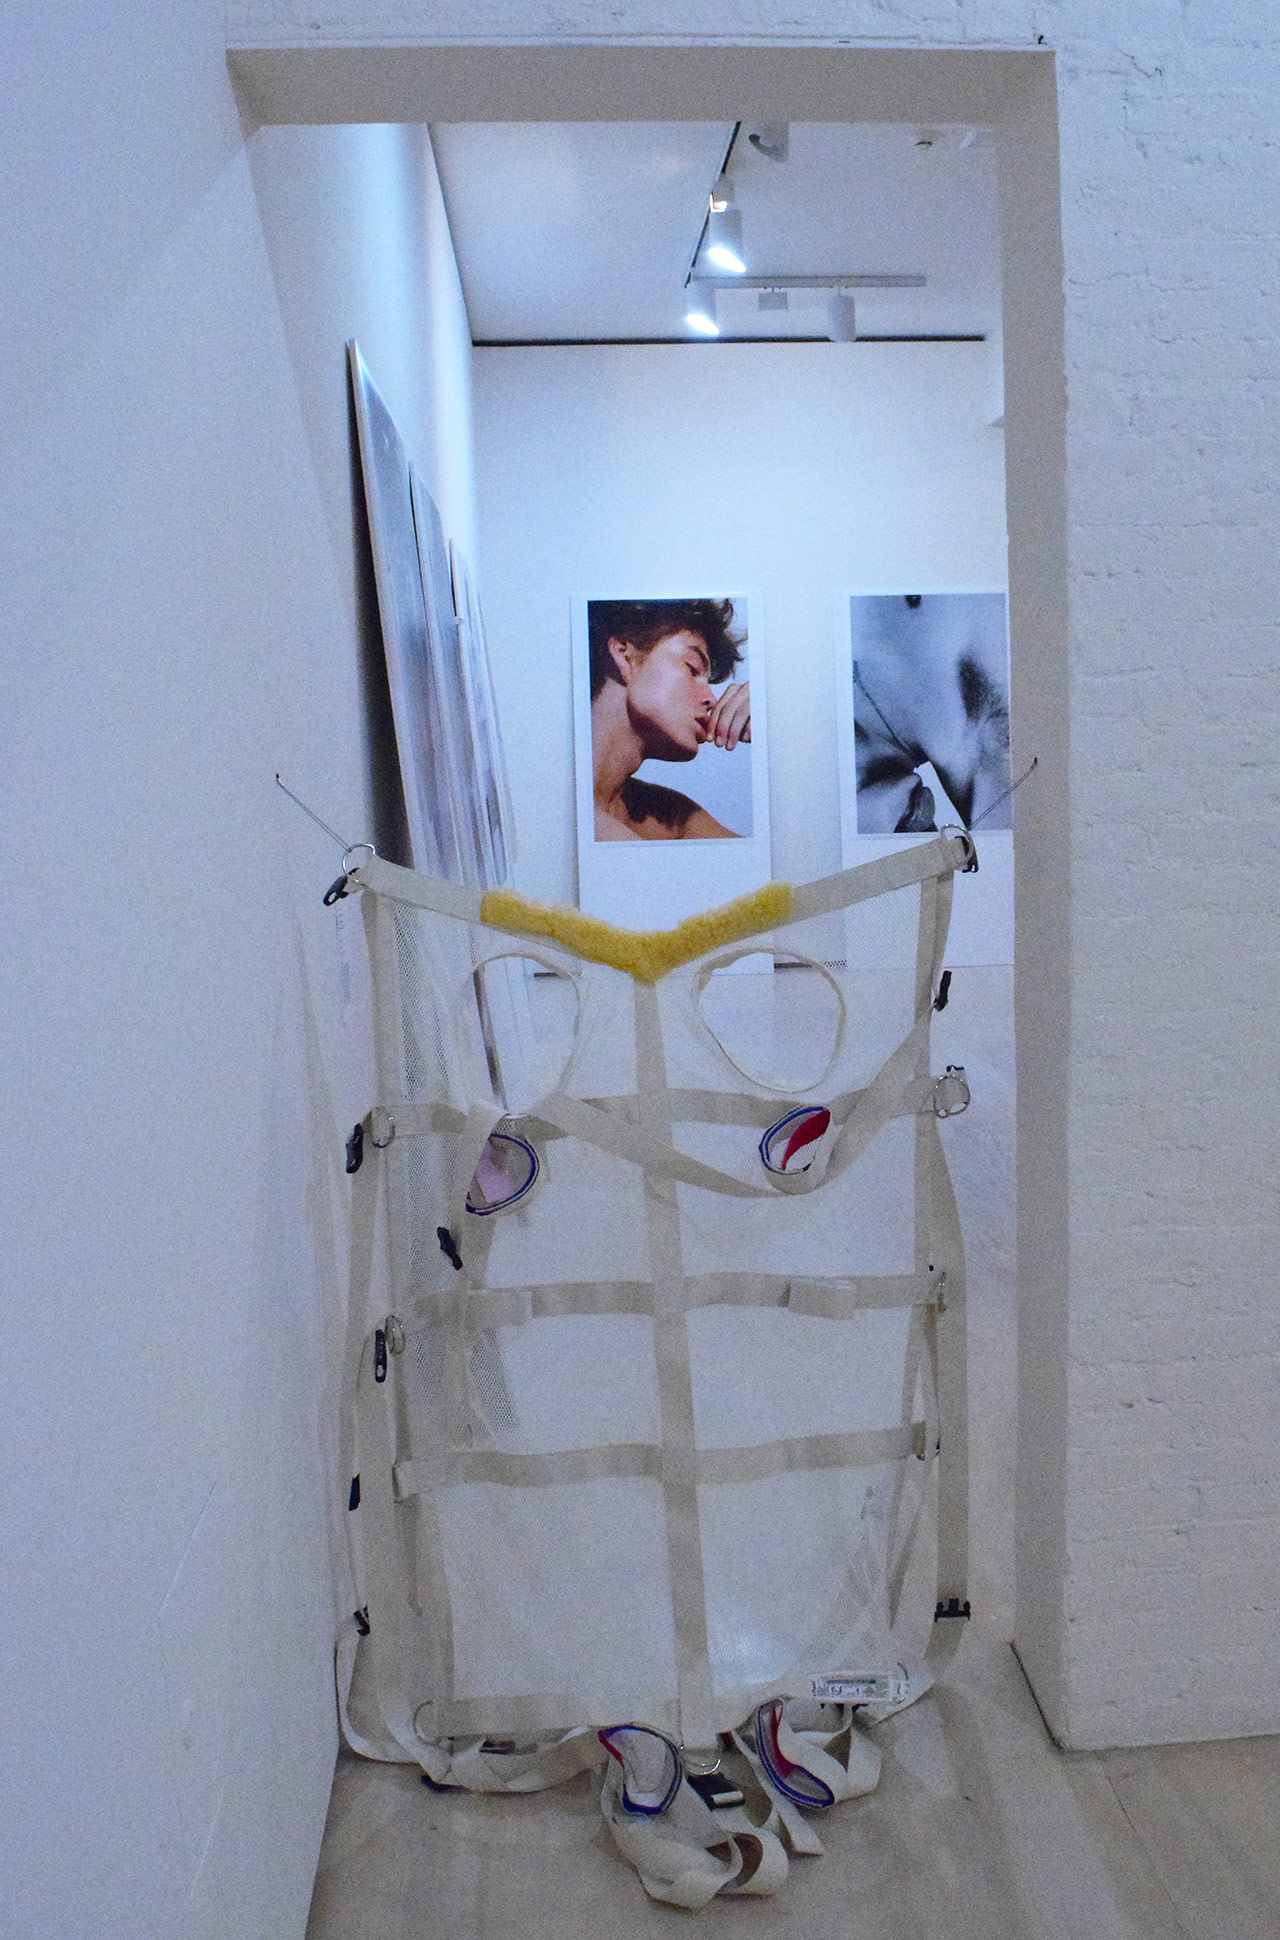 Park McArthur, "Posey Restraint" (2014) blocks a doorway on MoMA PS1's second floor.